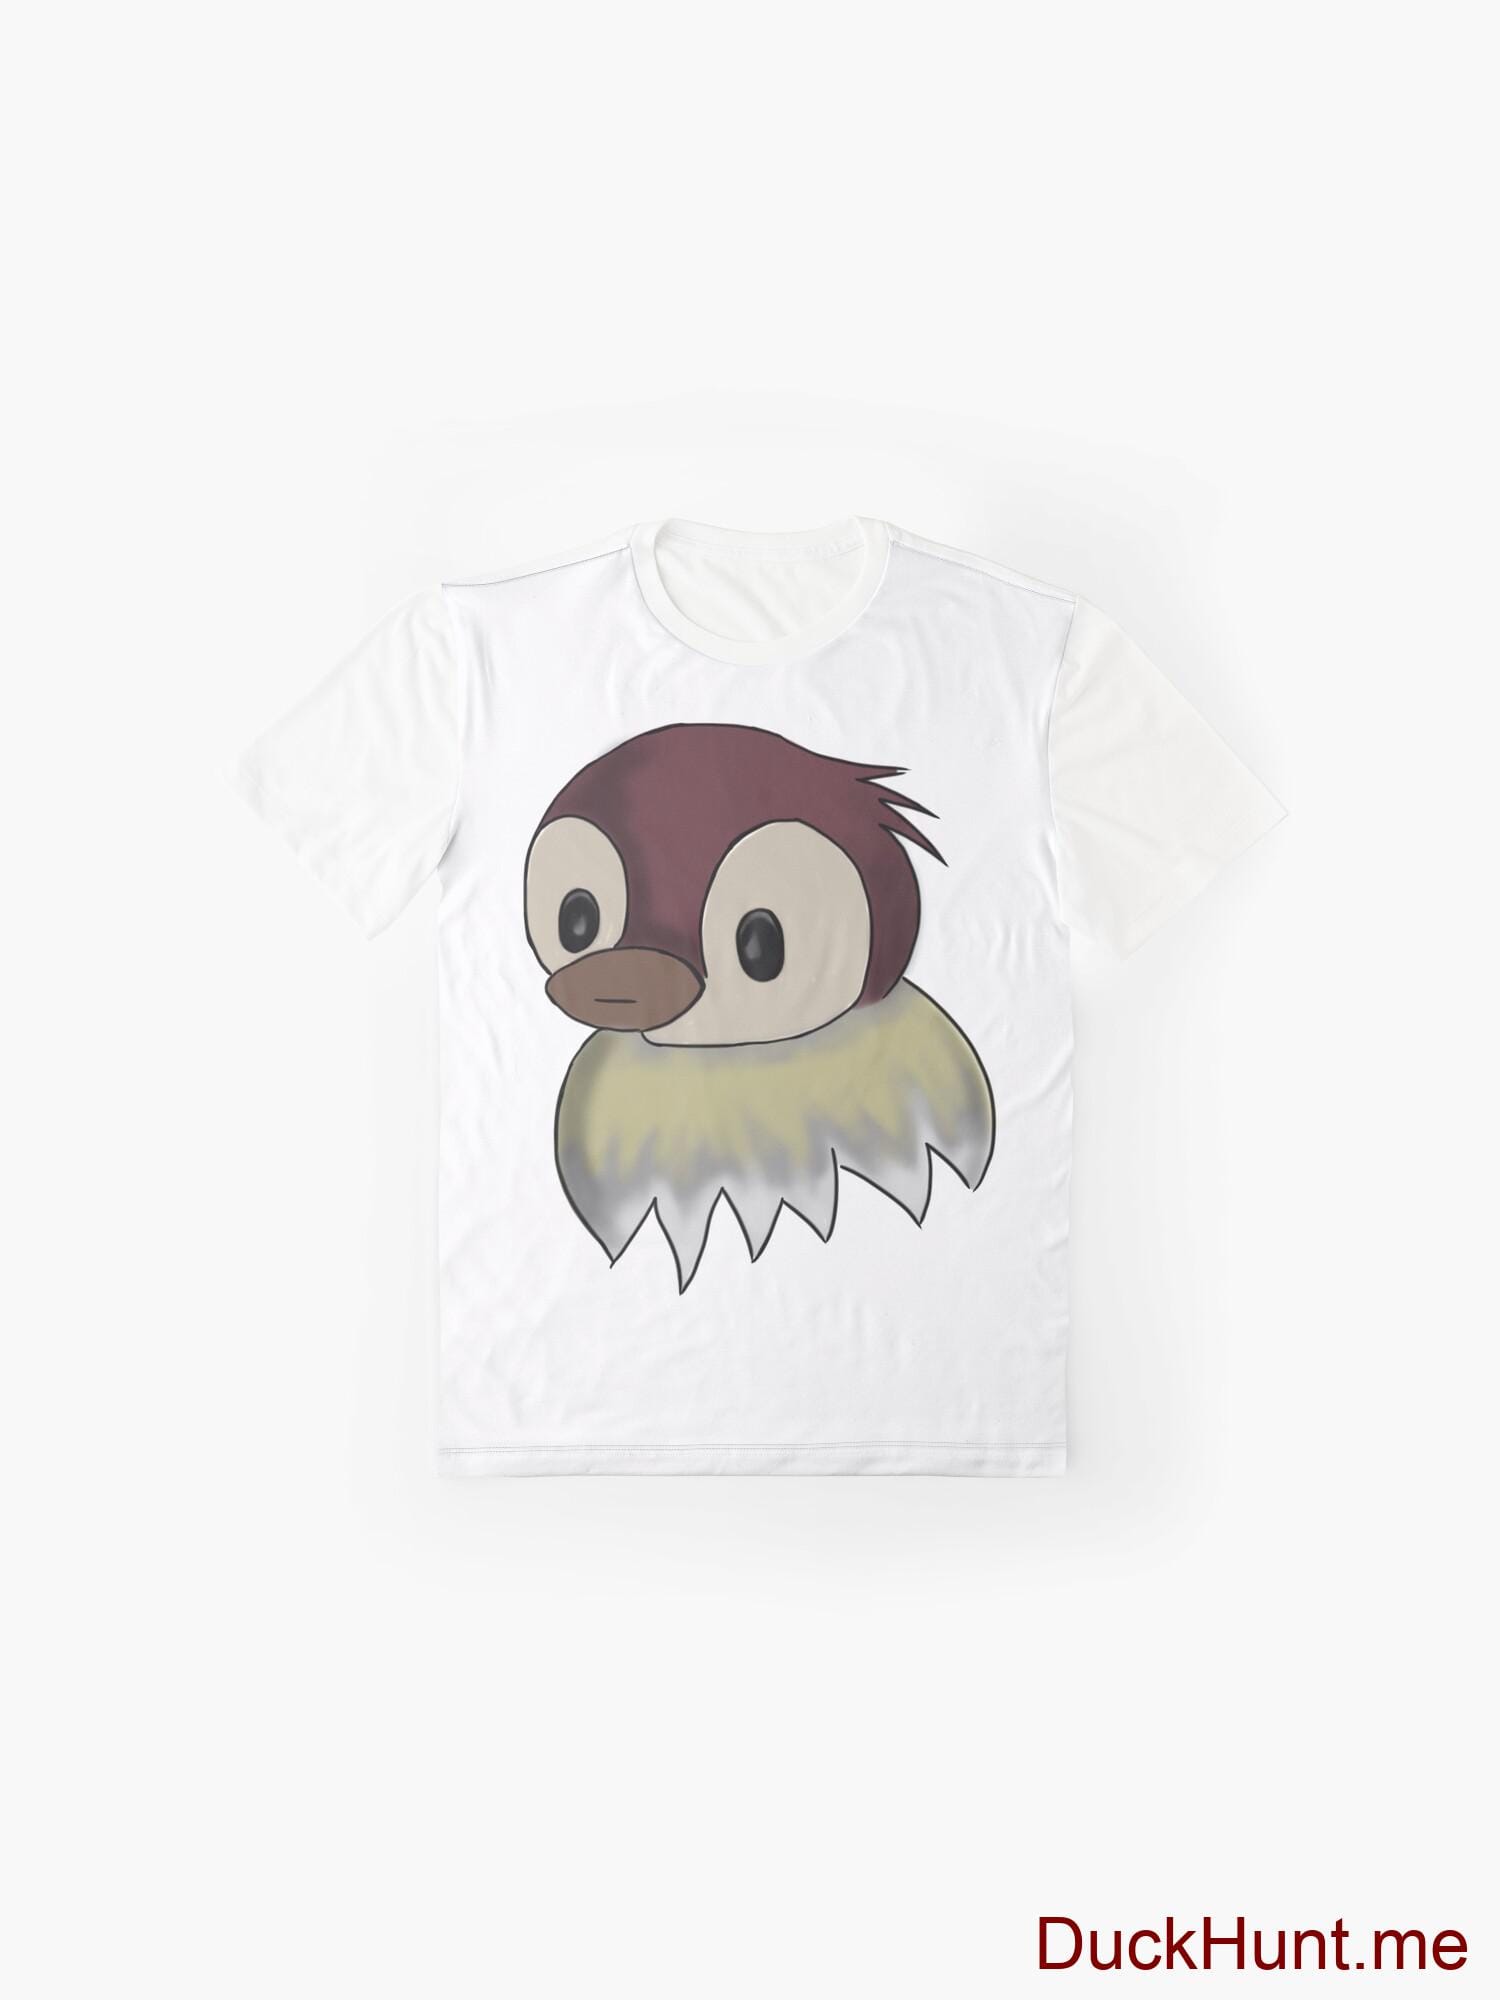 Ghost Duck (fogless) White Graphic T-Shirt alternative image 3